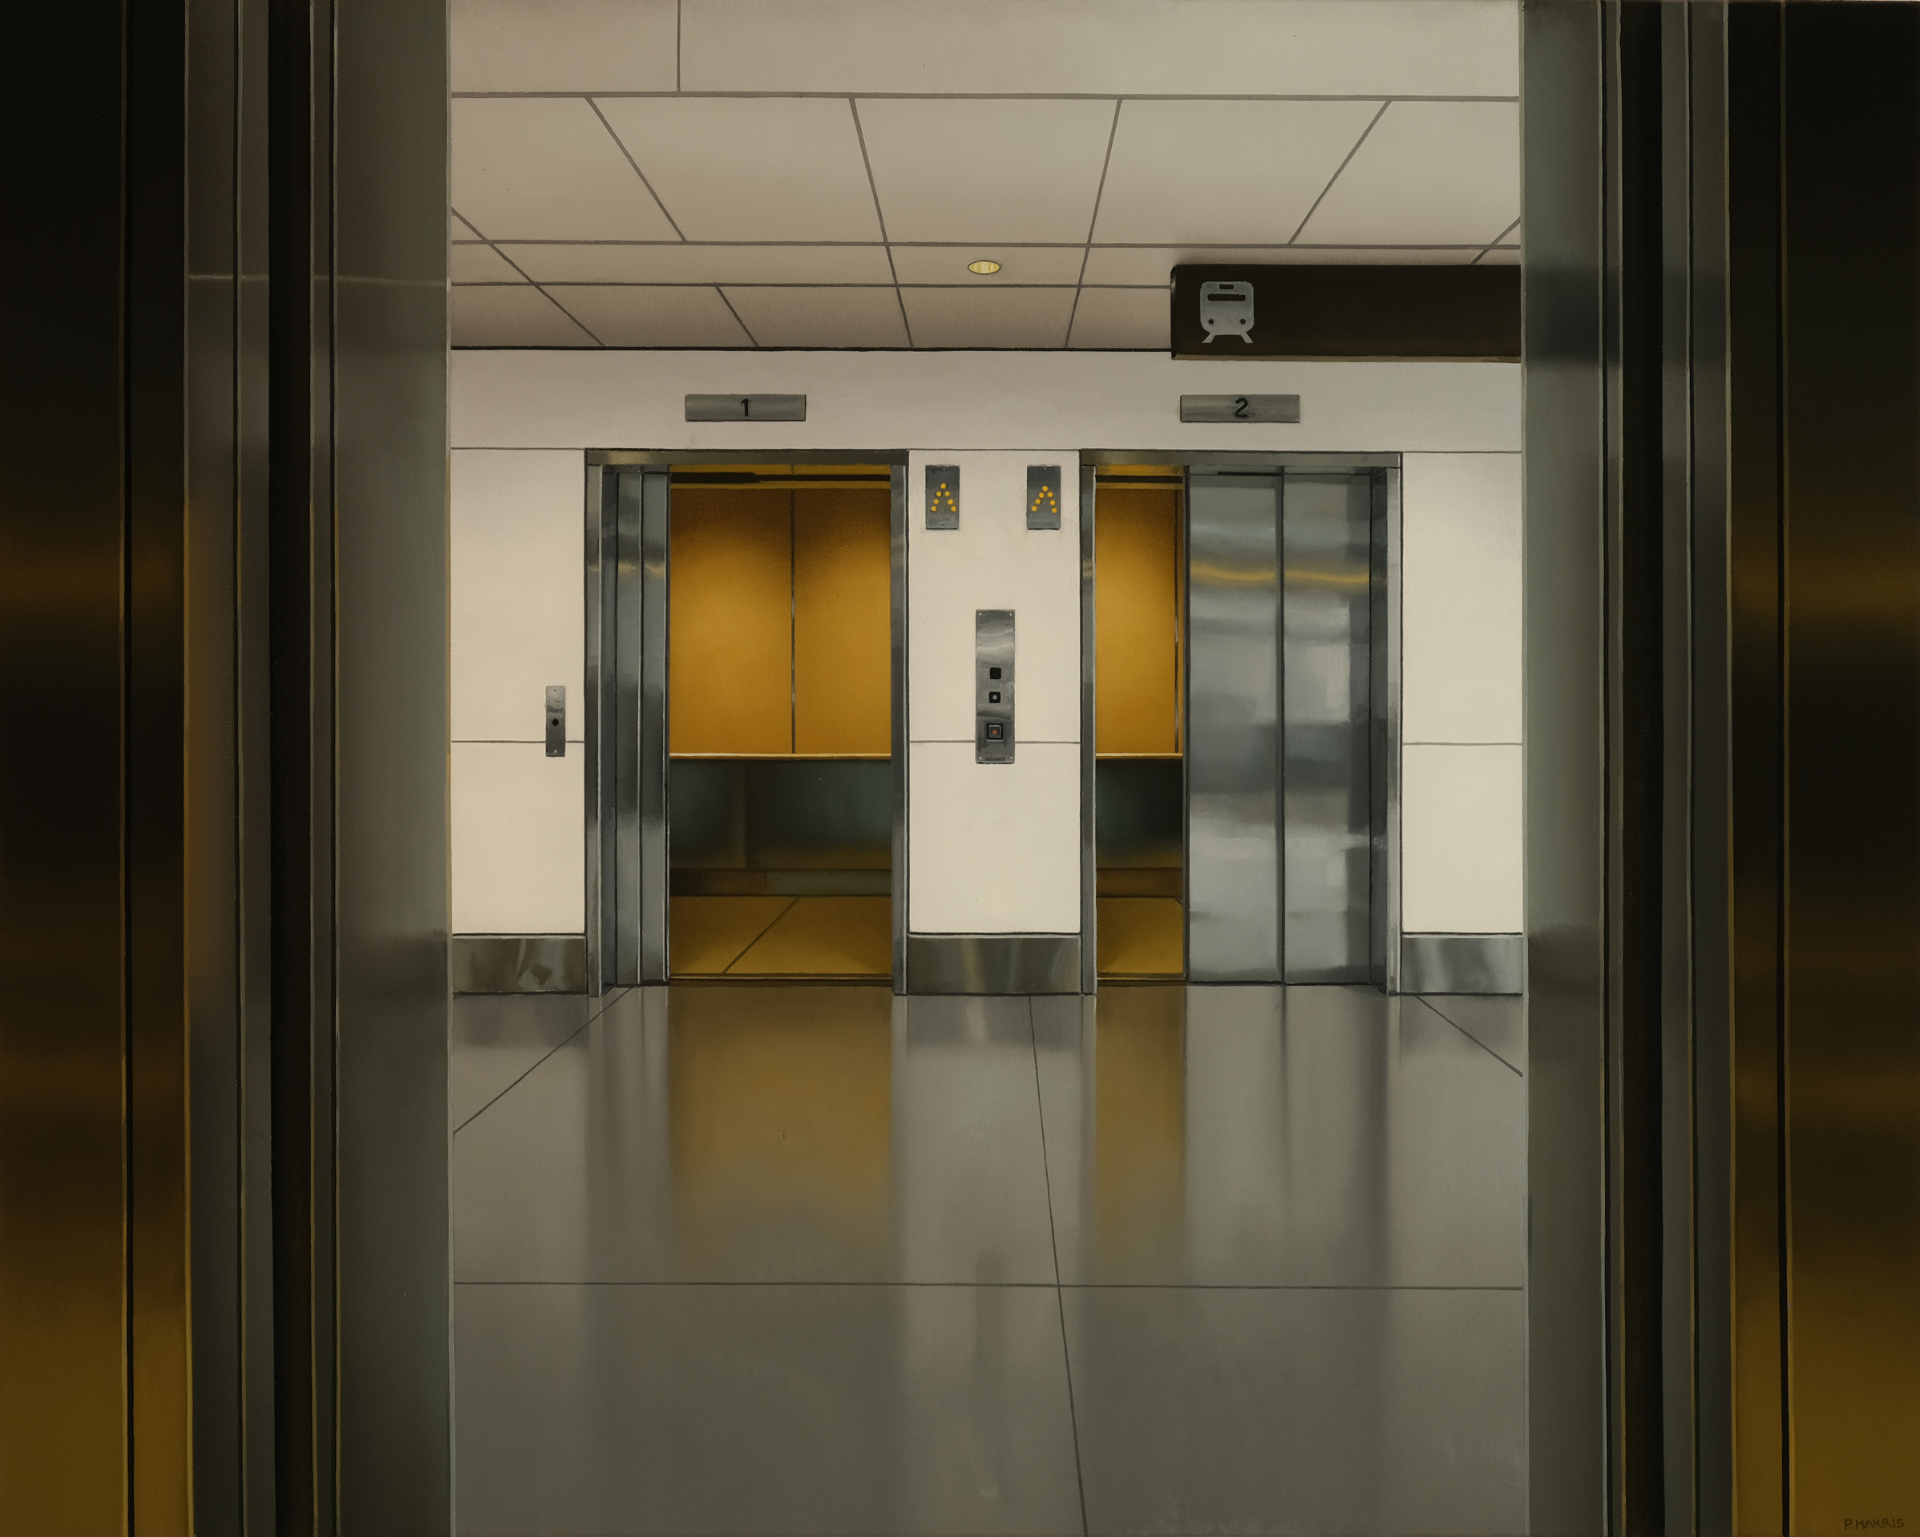 Peter Harris elevators-in-waiting